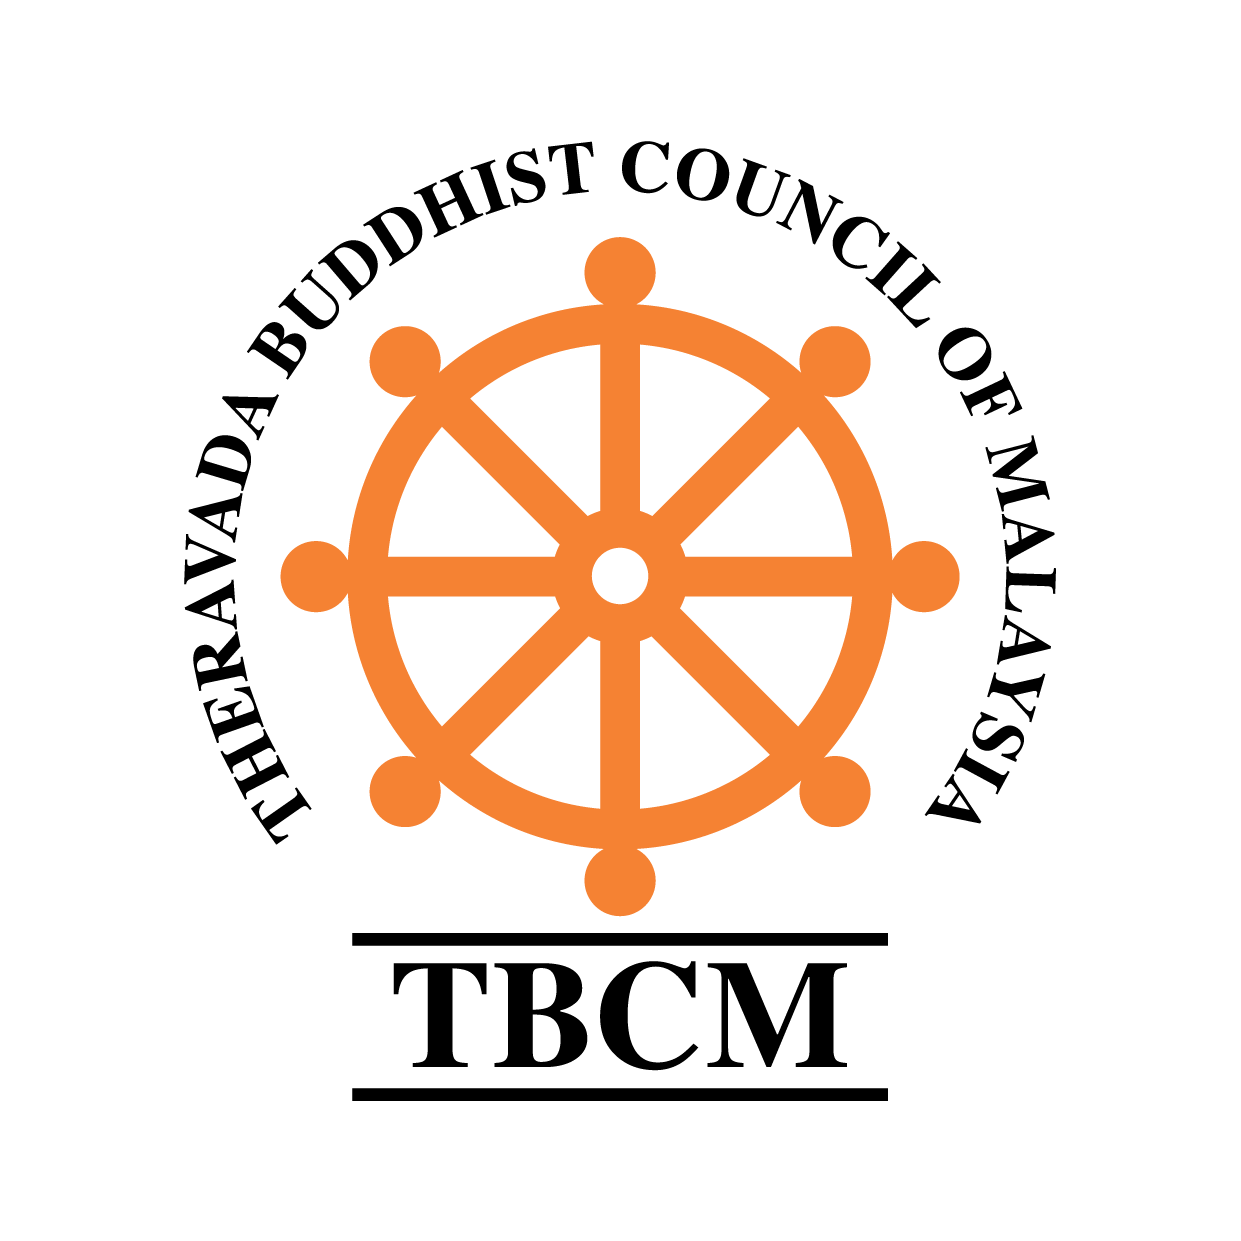 Theravada Buddhist Council of Malaysia